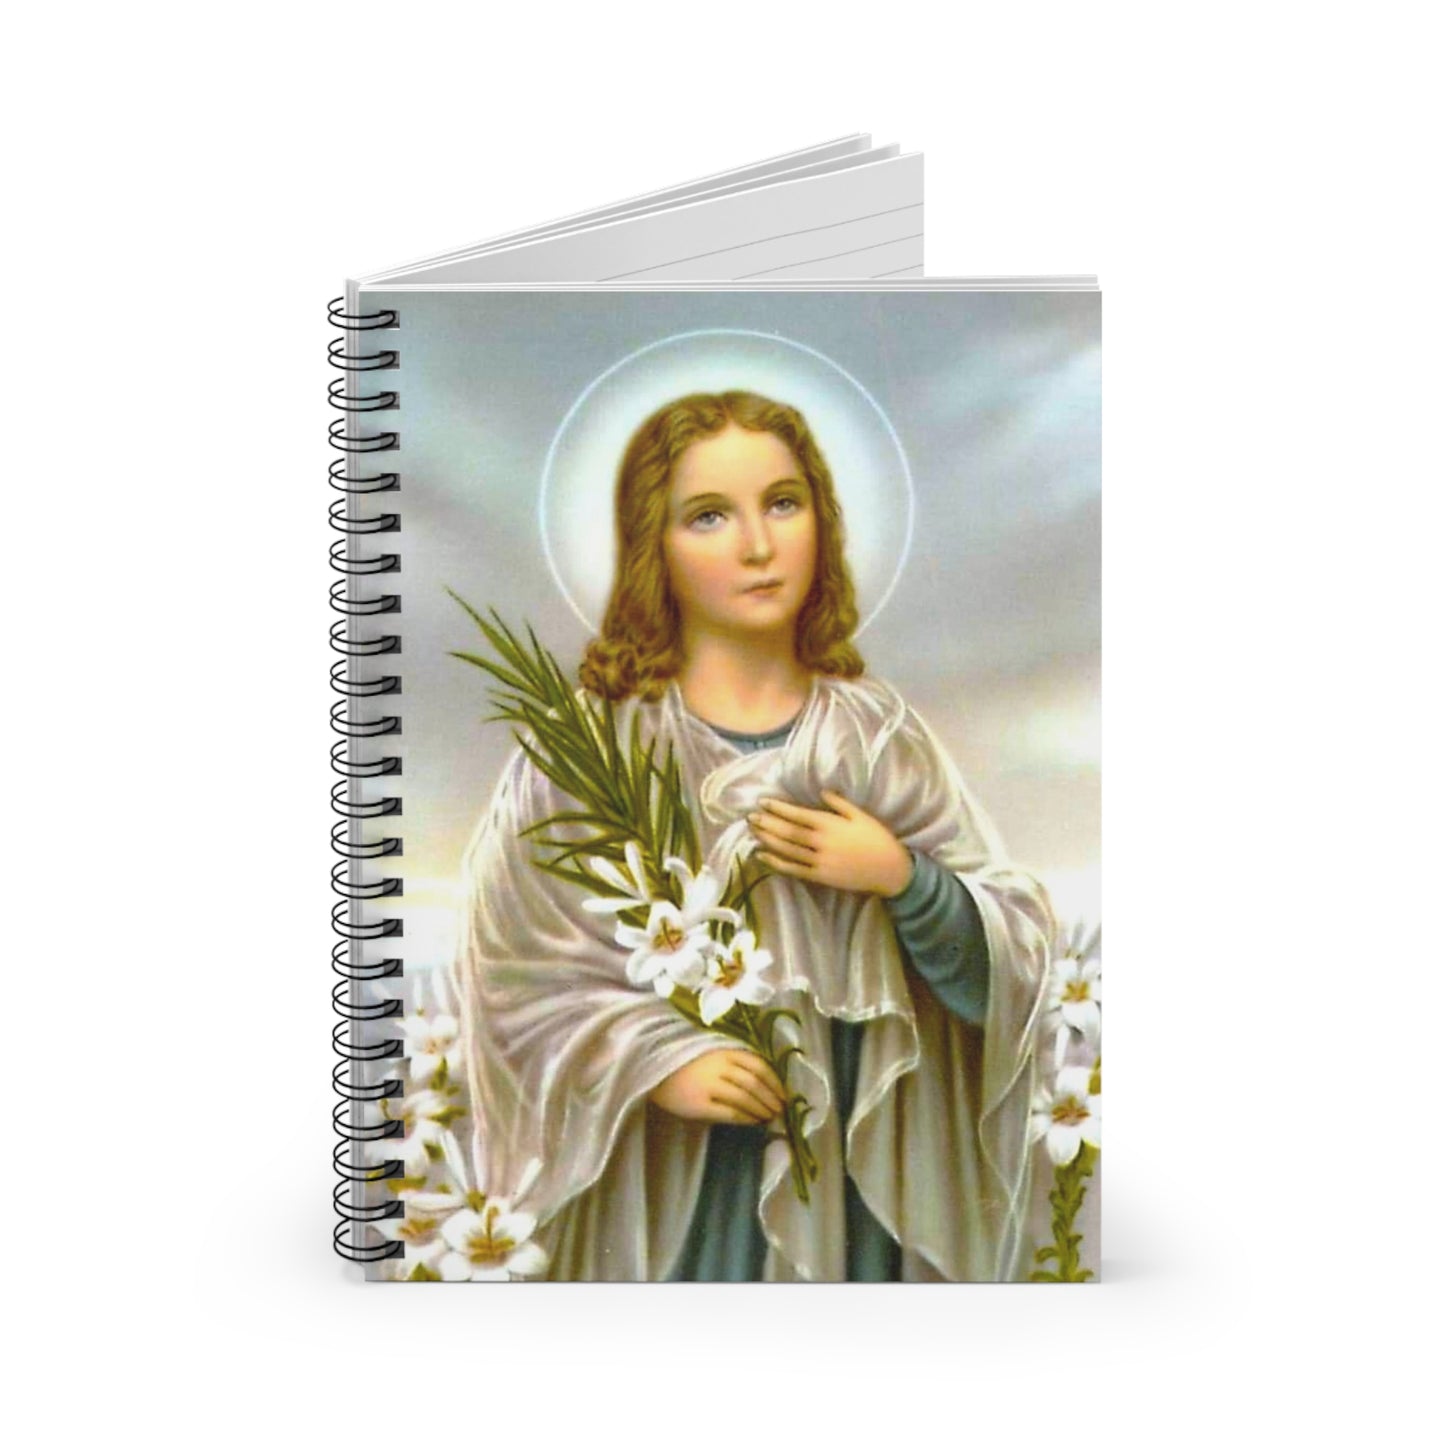 Saint Maria Goretti Confirmation Notebook Gift, Adoration Journal